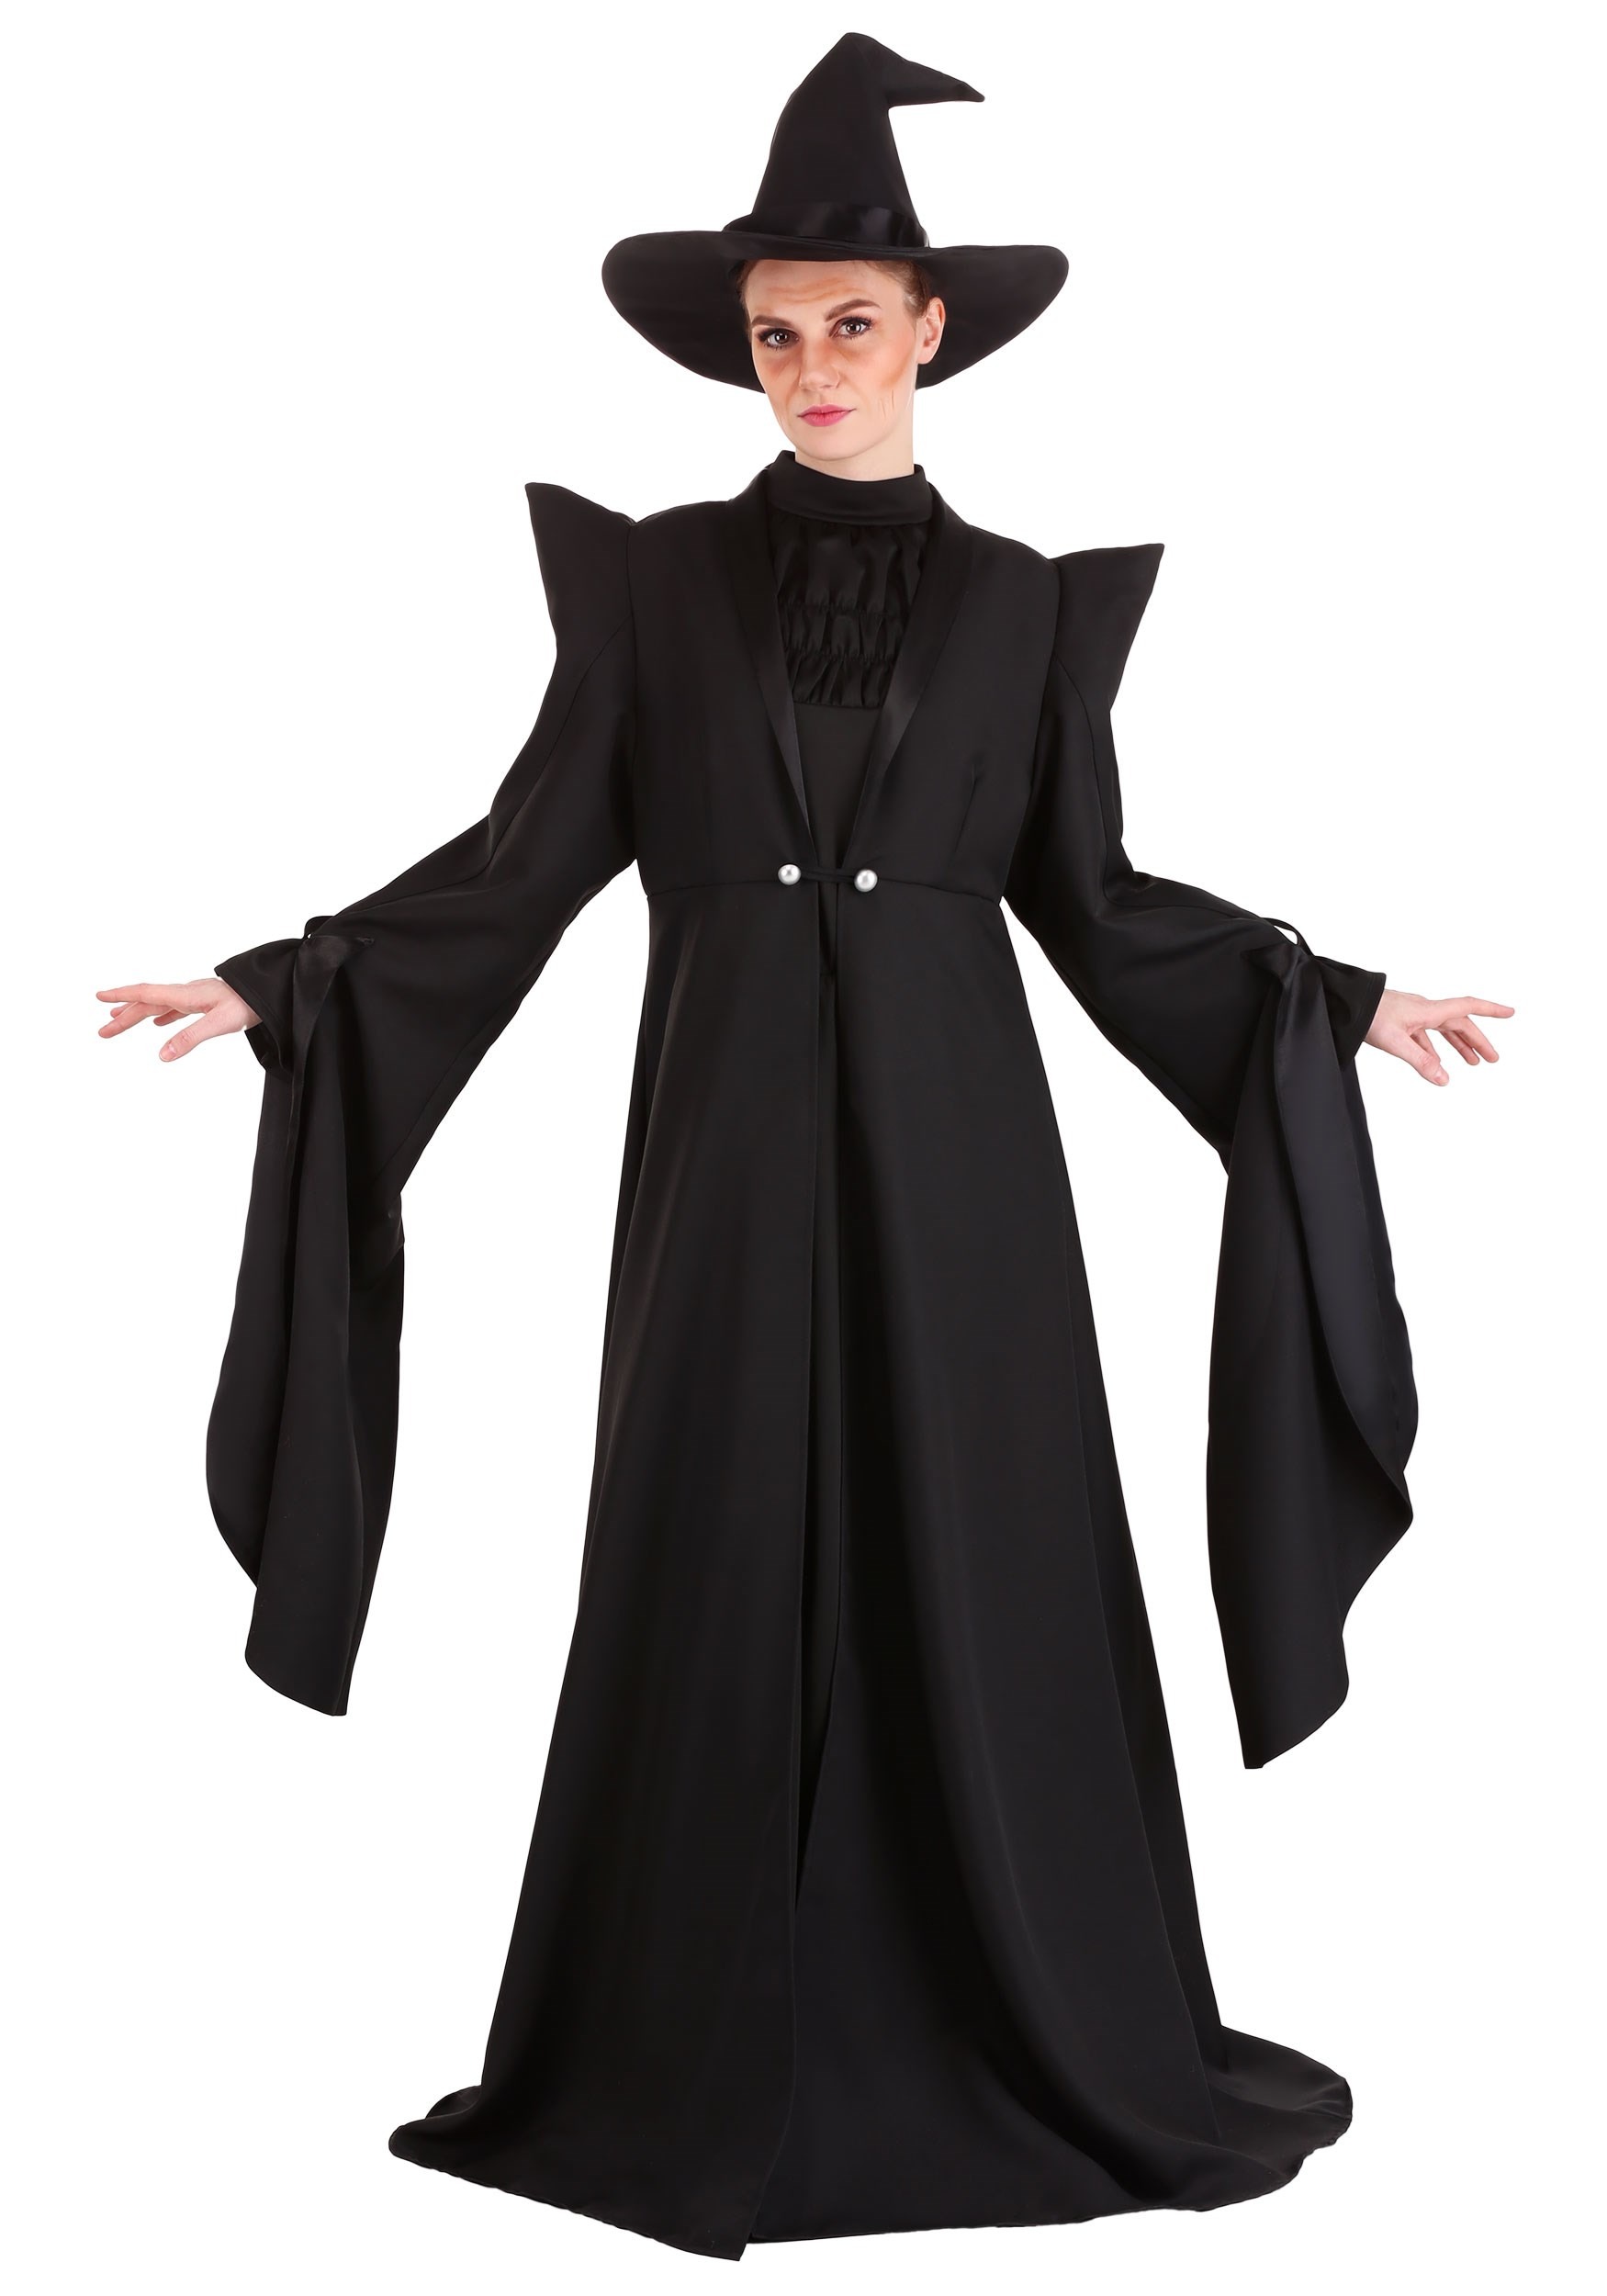 Photos - Fancy Dress Deluxe FUN Costumes  Harry Potter McGonagall Women's Costume Black FUN1442A 